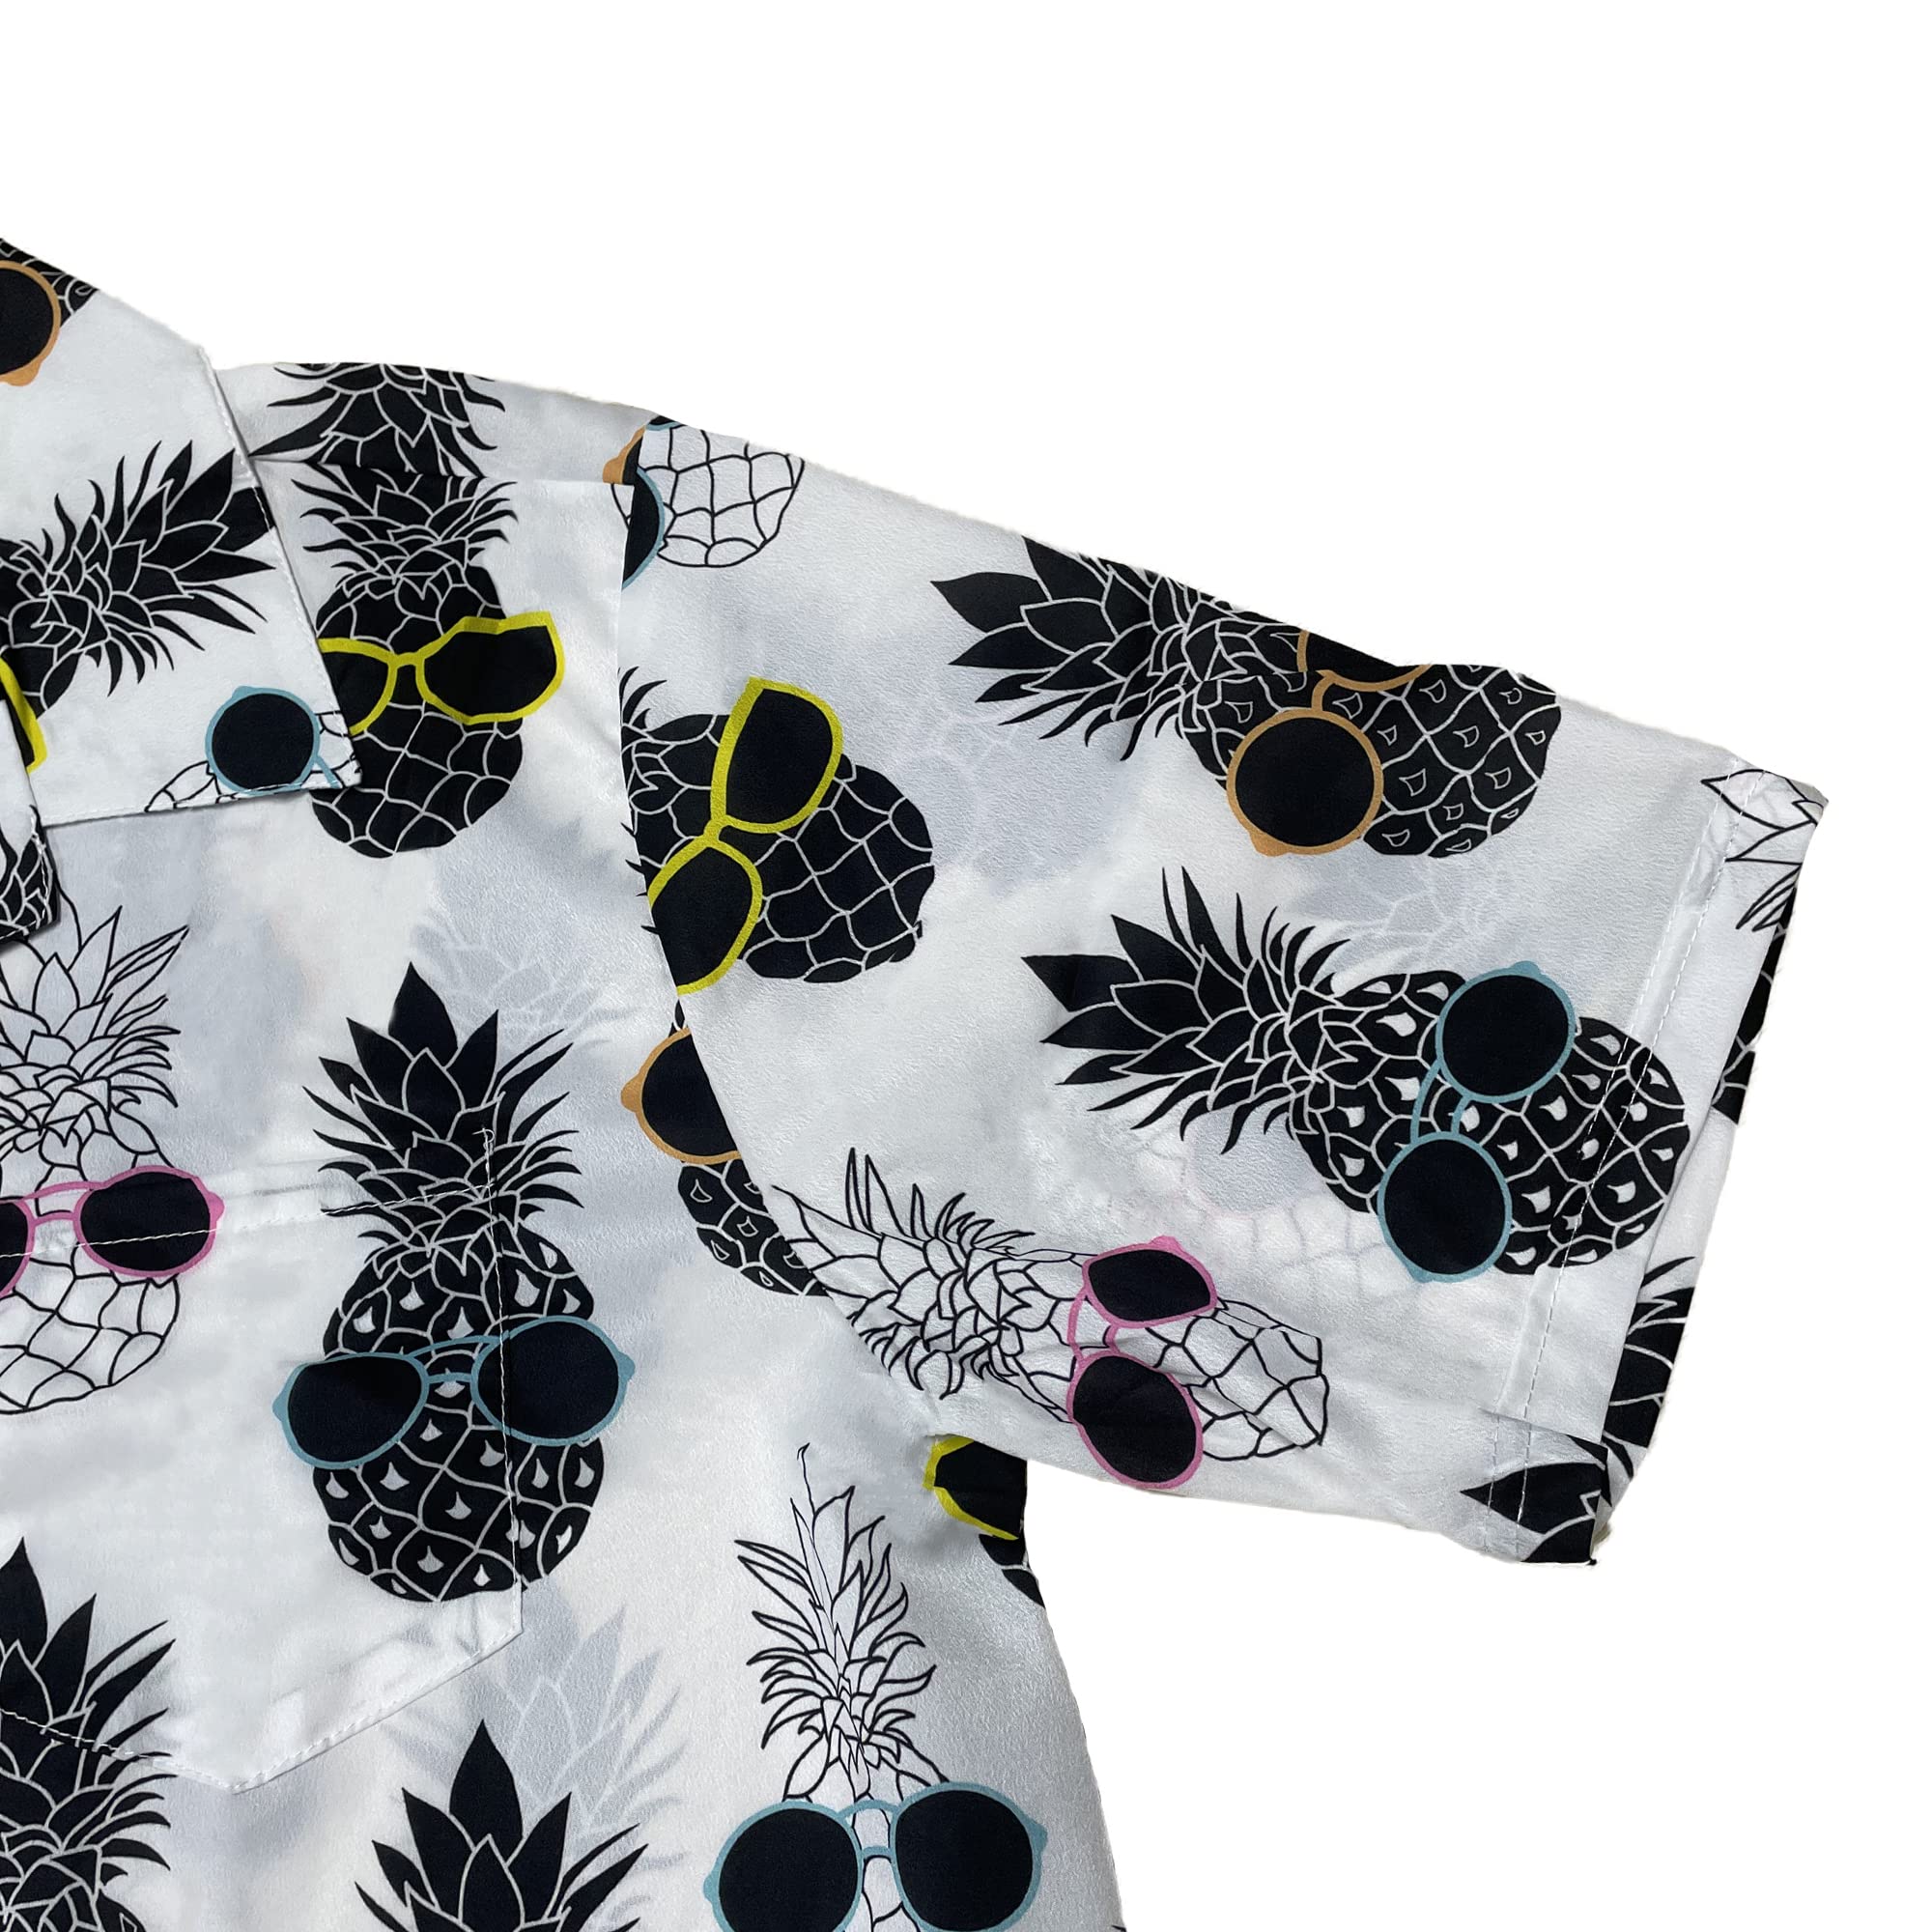 Men's Hawaiian Shirt Casual Button Down Short Sleeves Beach Shirt - Pineapple